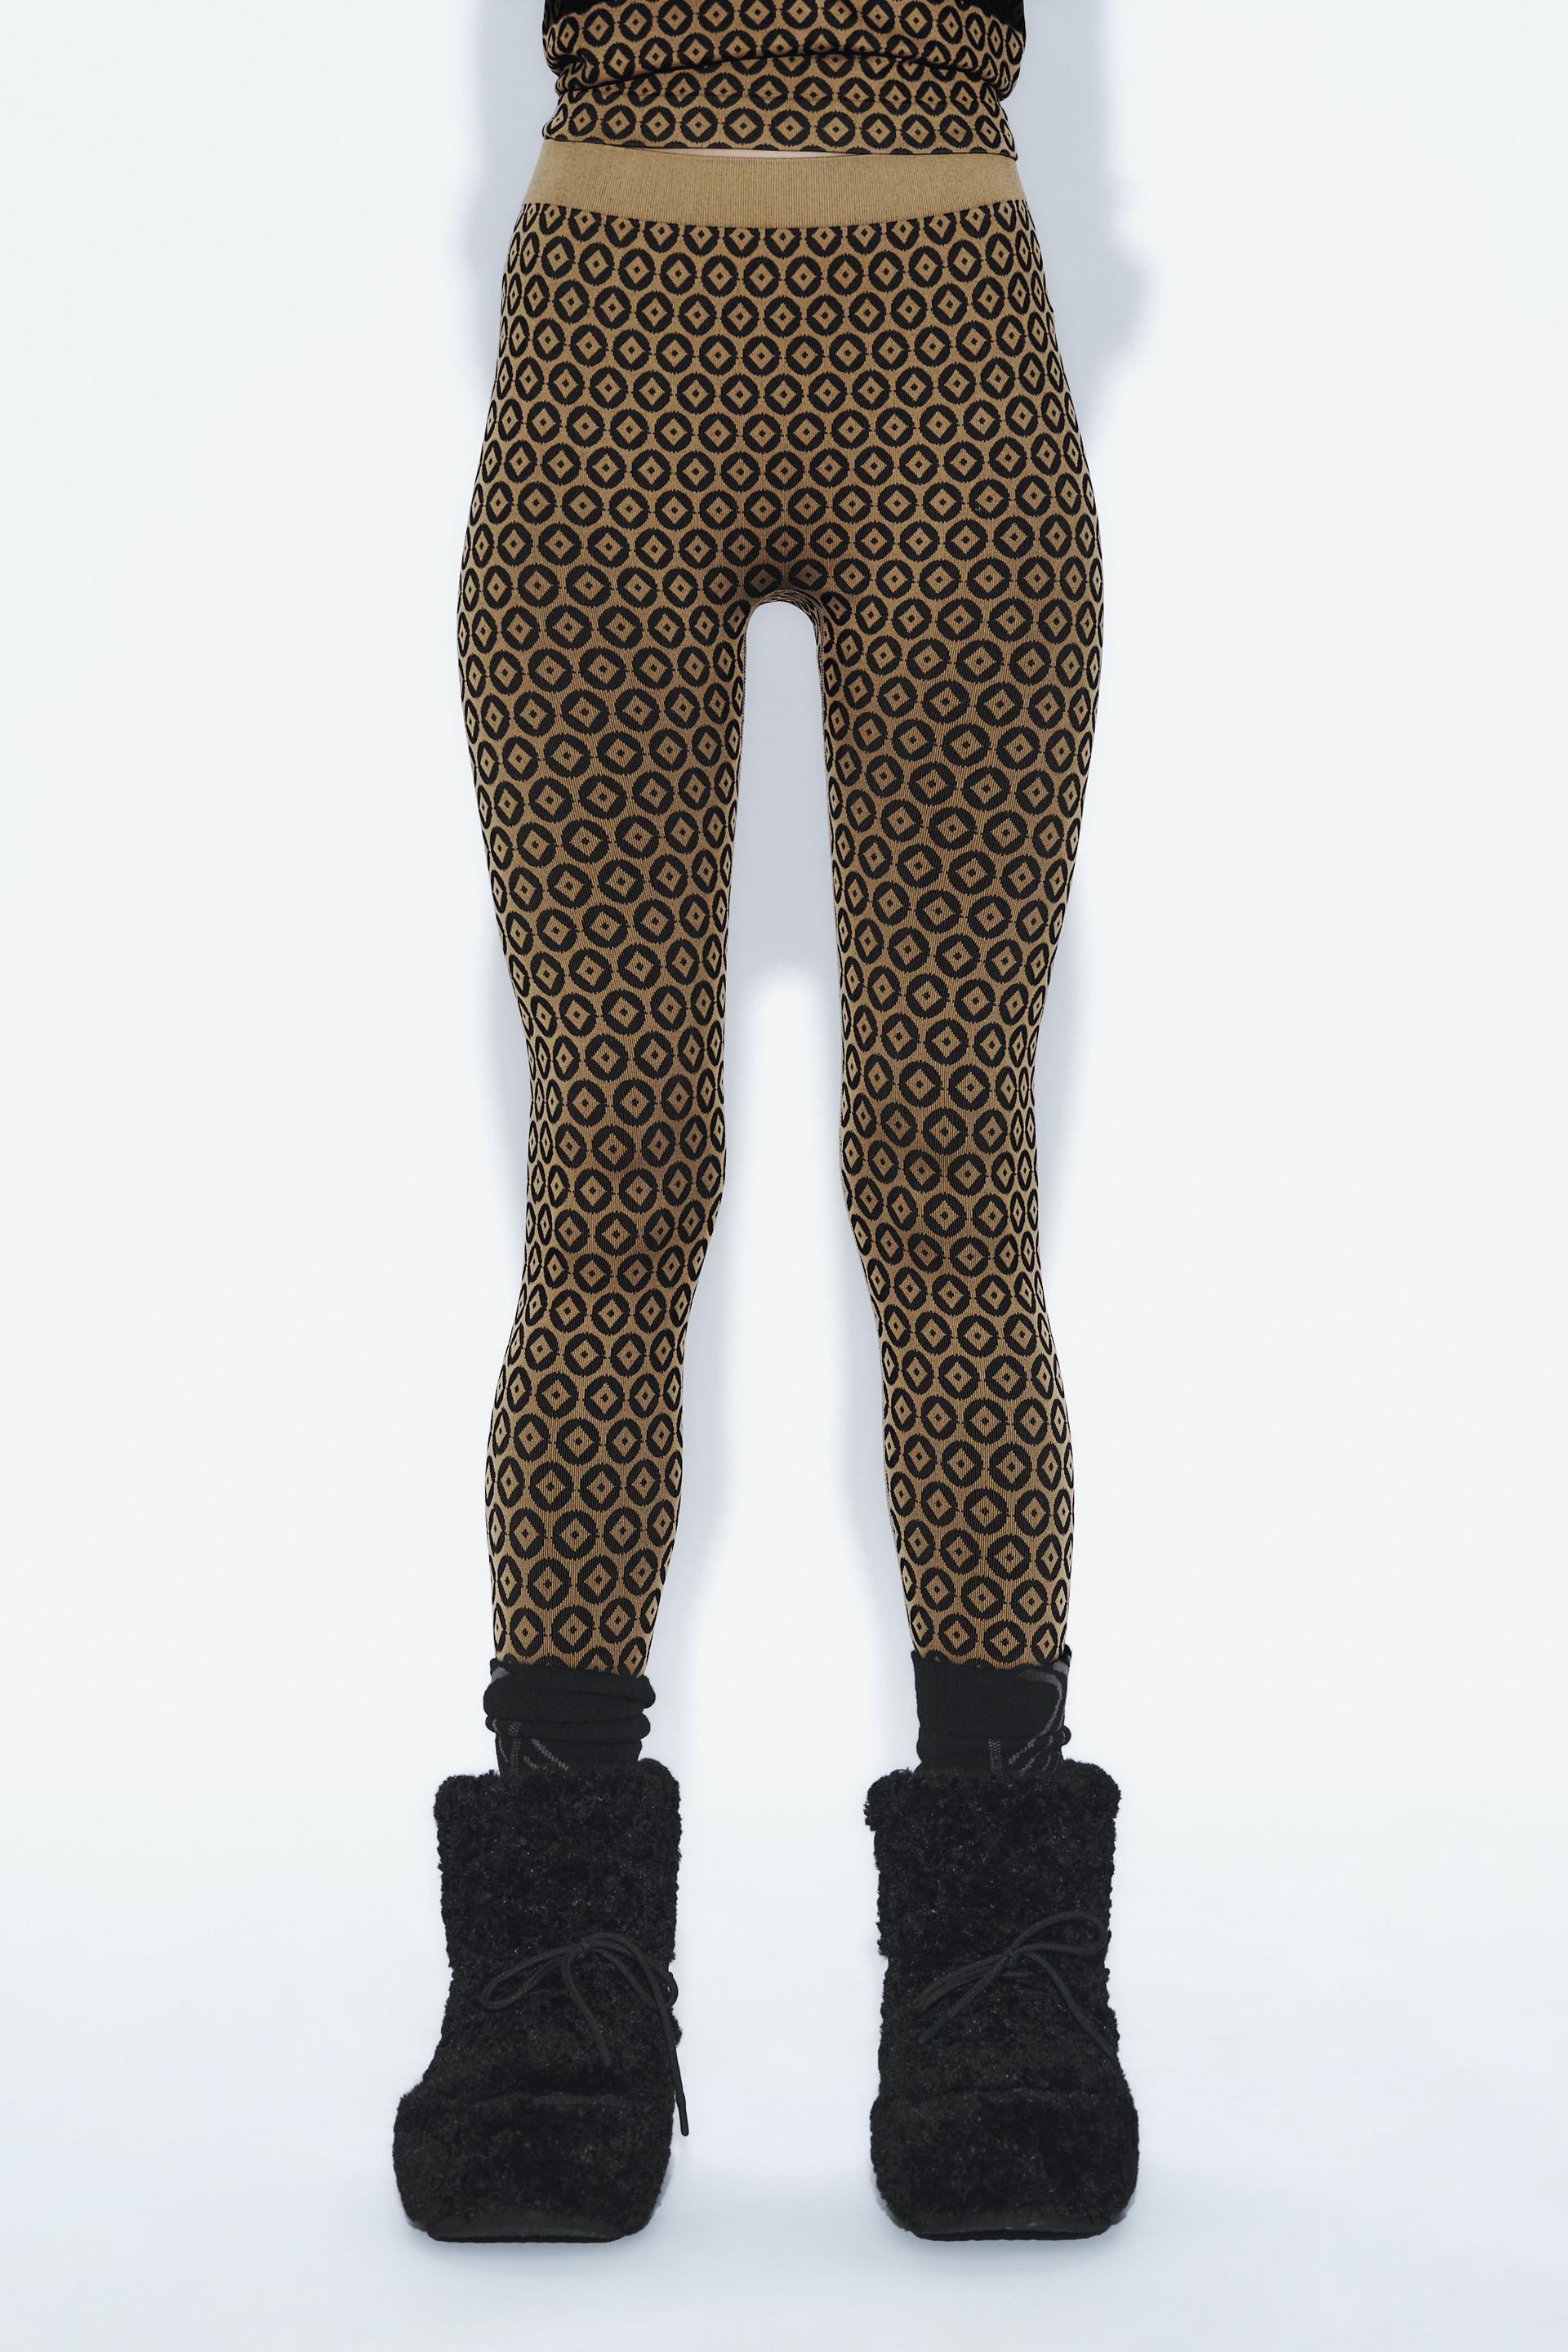 Buy Leopard print sports leggings Online in Dubai & the UAE